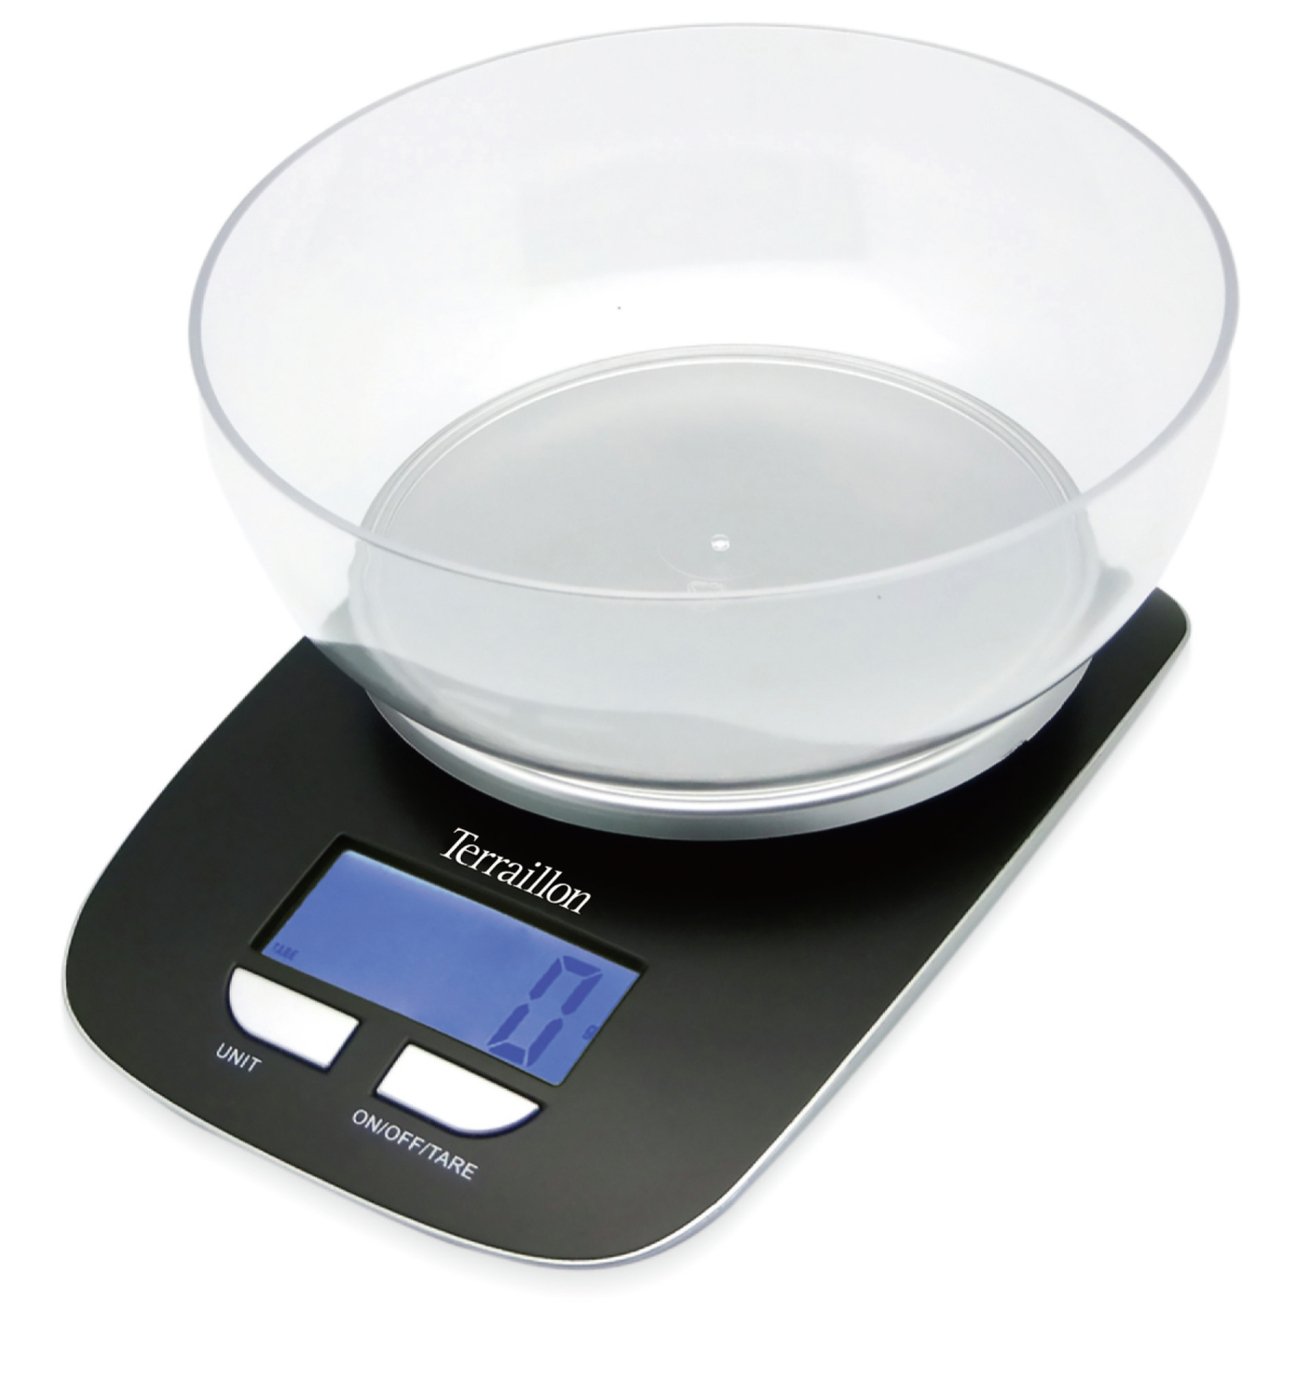 Terraillon Digital Bowl Scale - Black